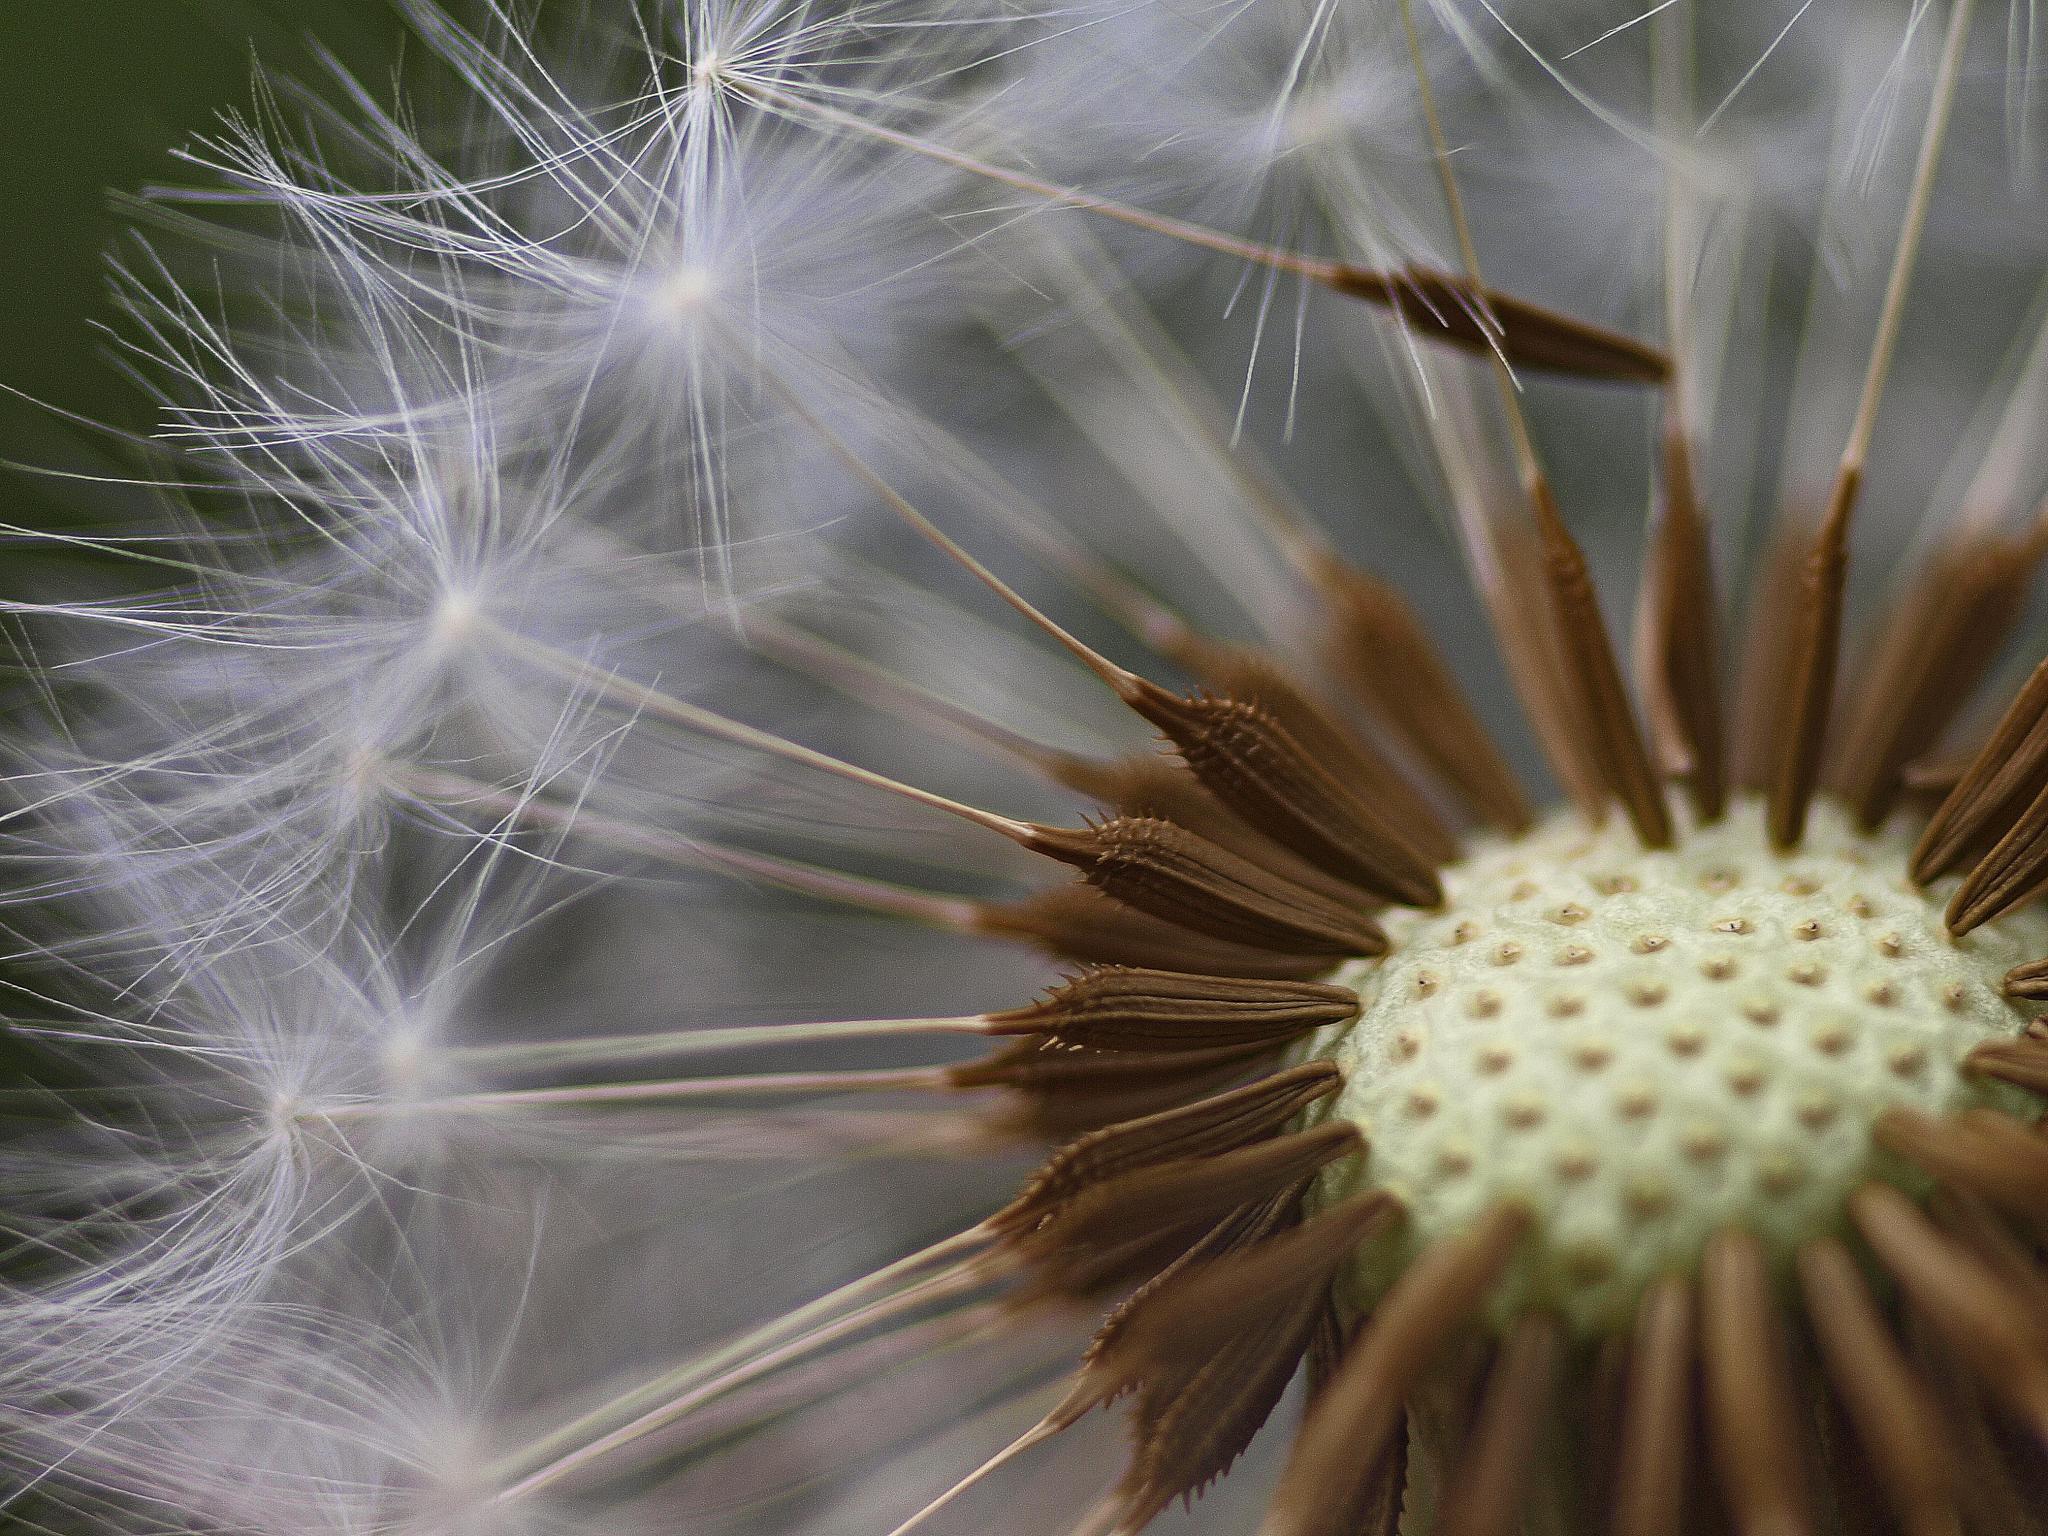 File:Dandelion seed head closeup.jpg - Wikimedia Commons